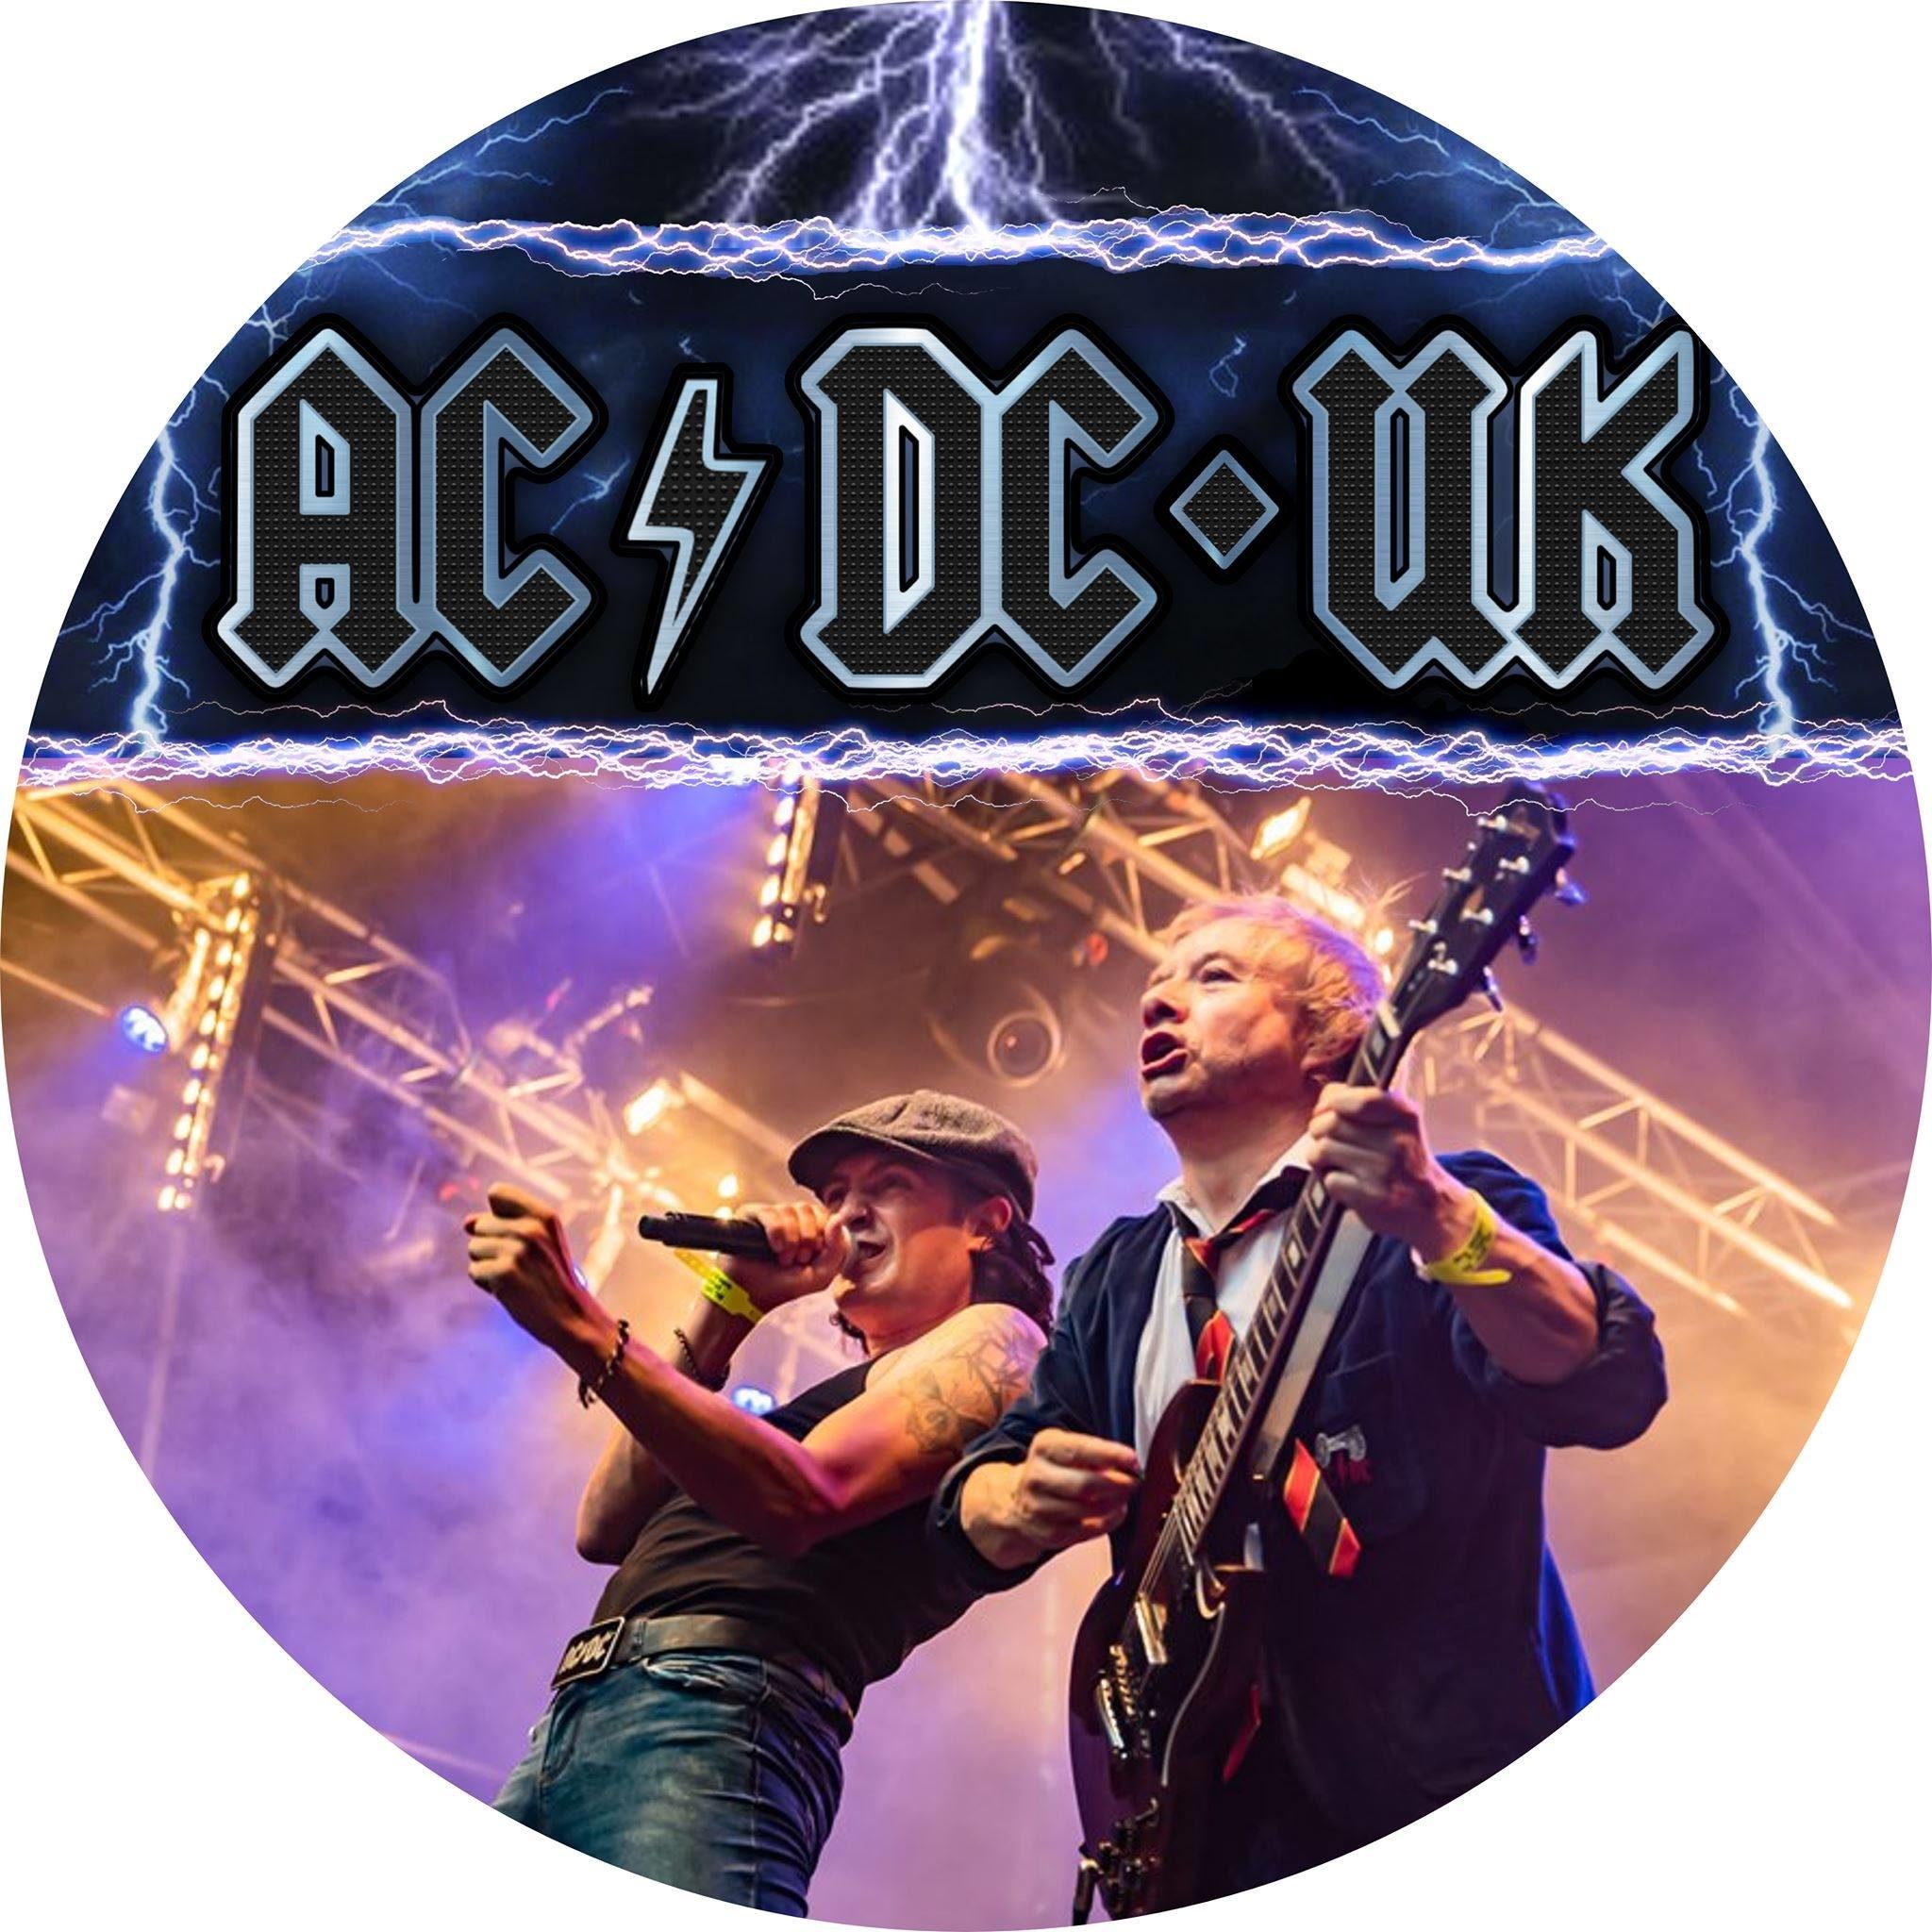 Udvalg sortie Opdater AC/DC UK - band